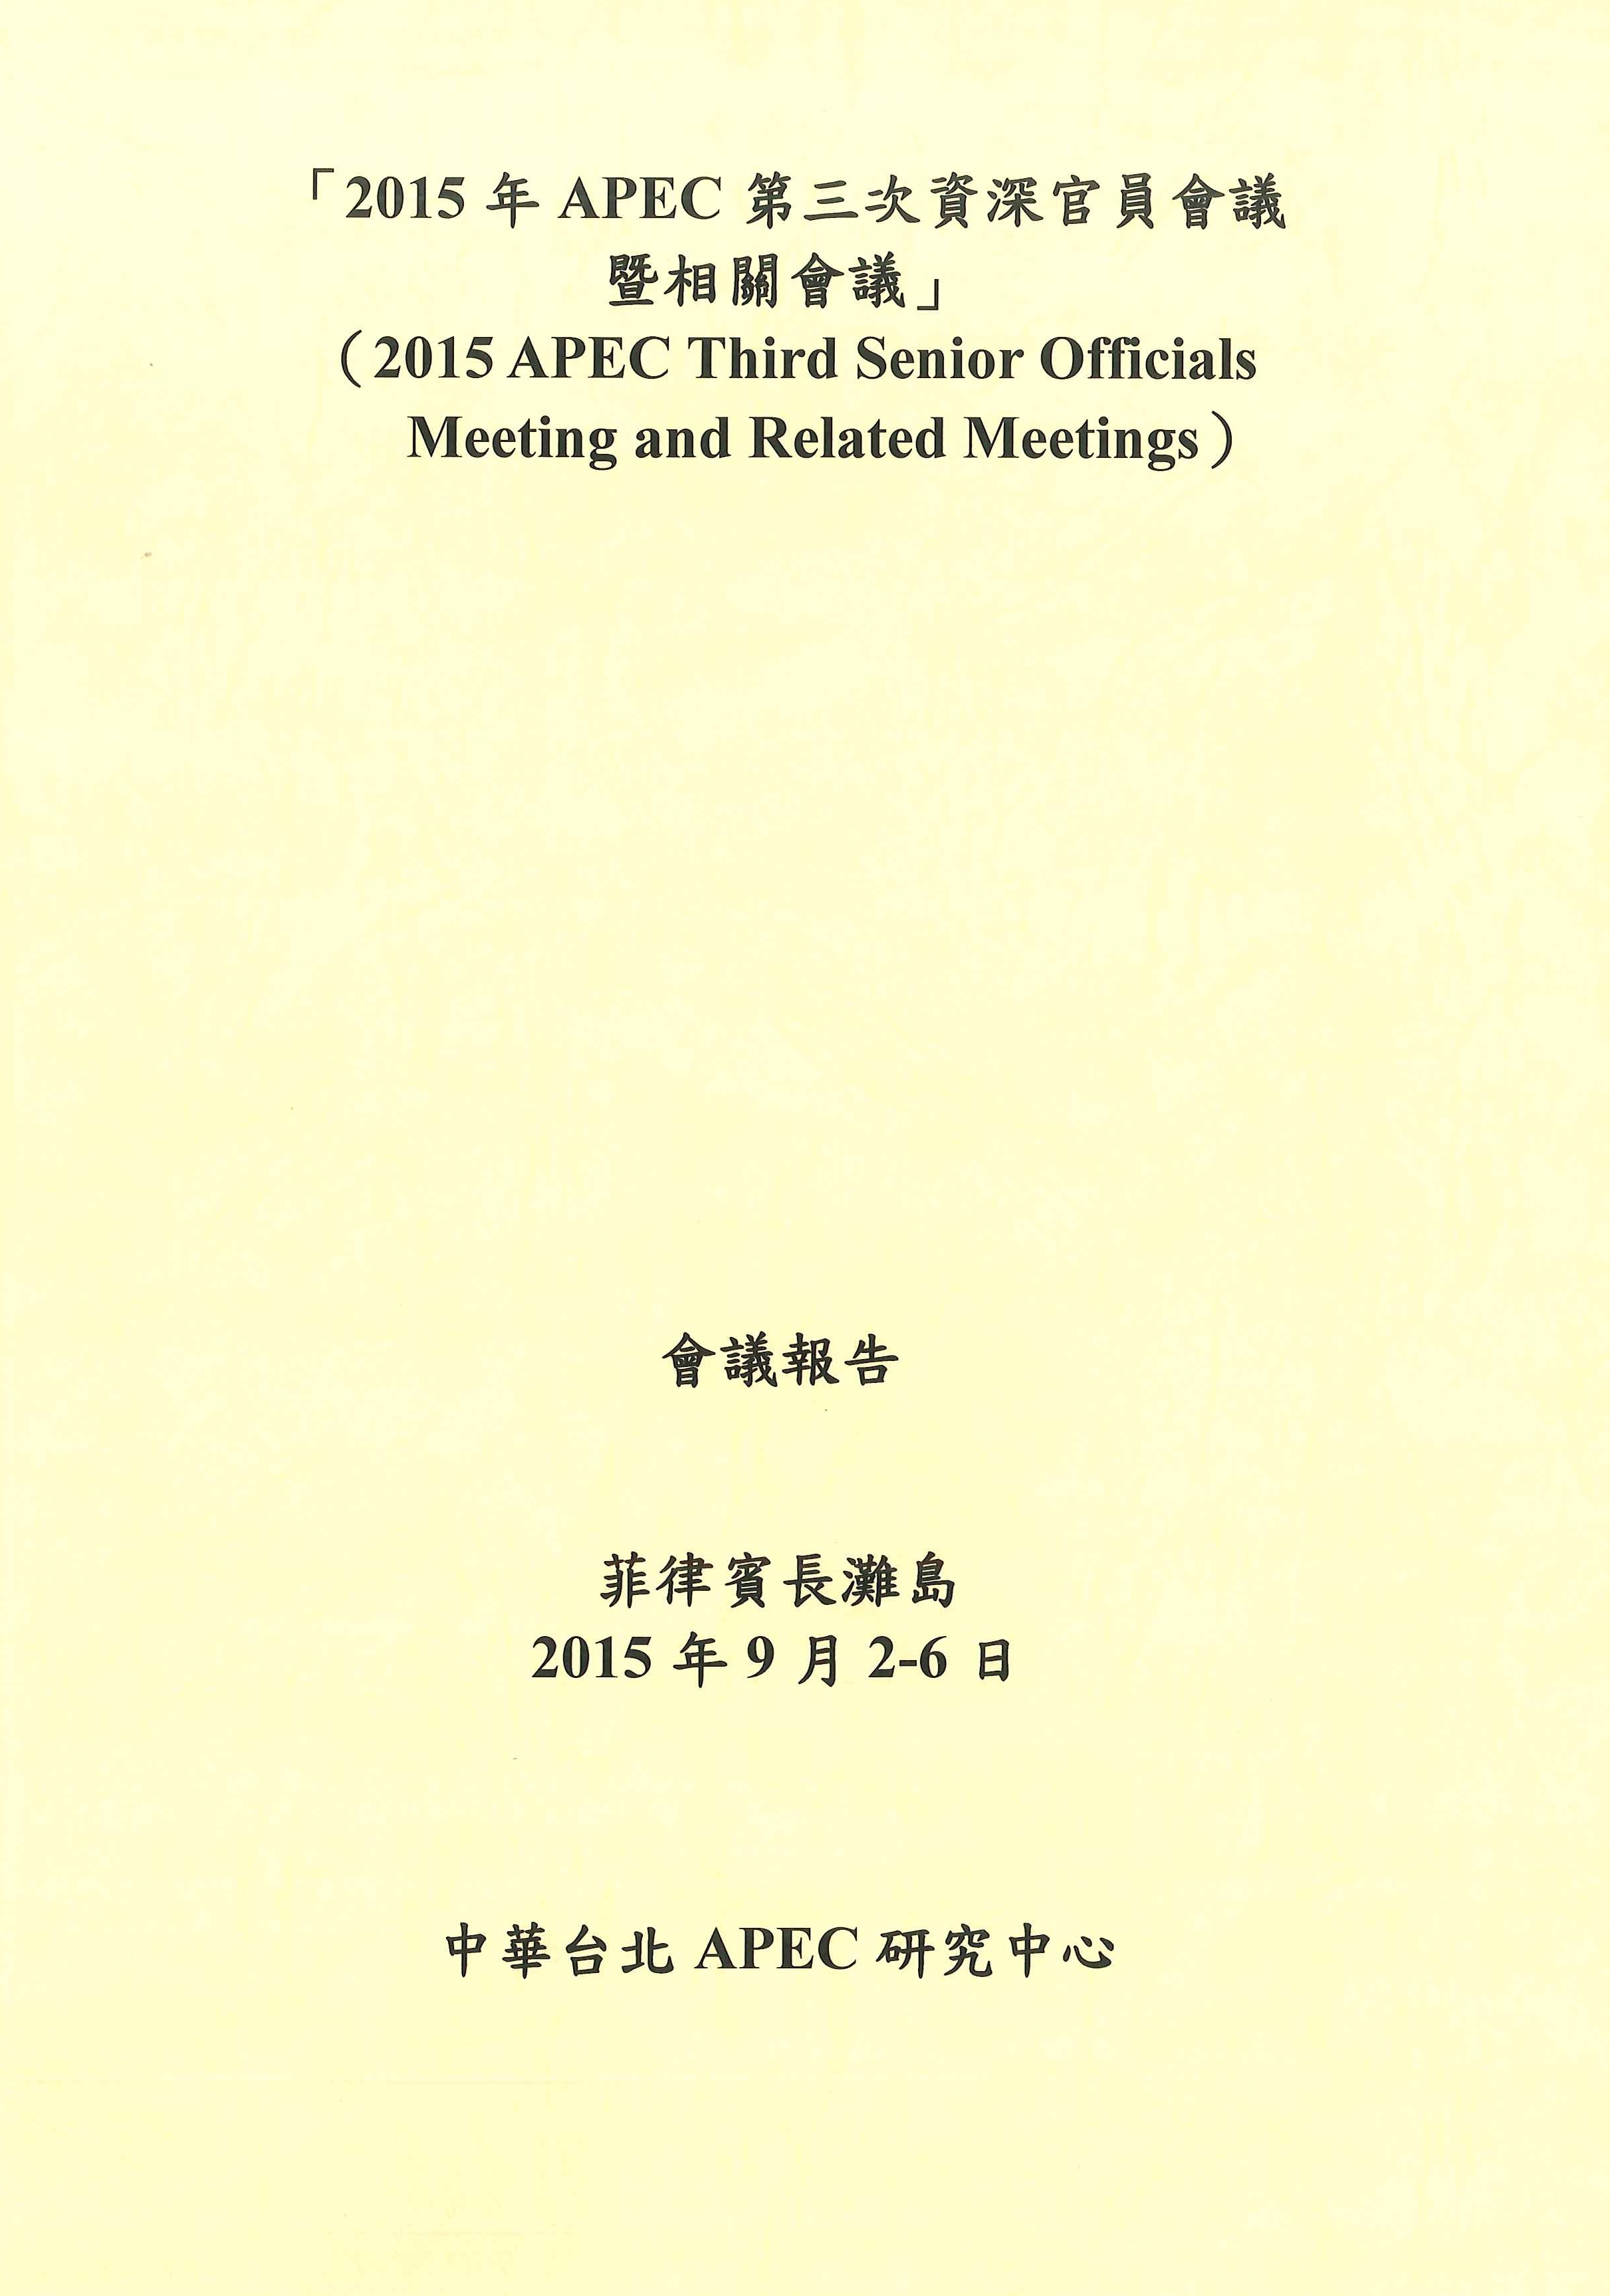 2015年APEC第三次資深官員會議暨相關會議=2015 APEC third senior officials meeting and related meetings